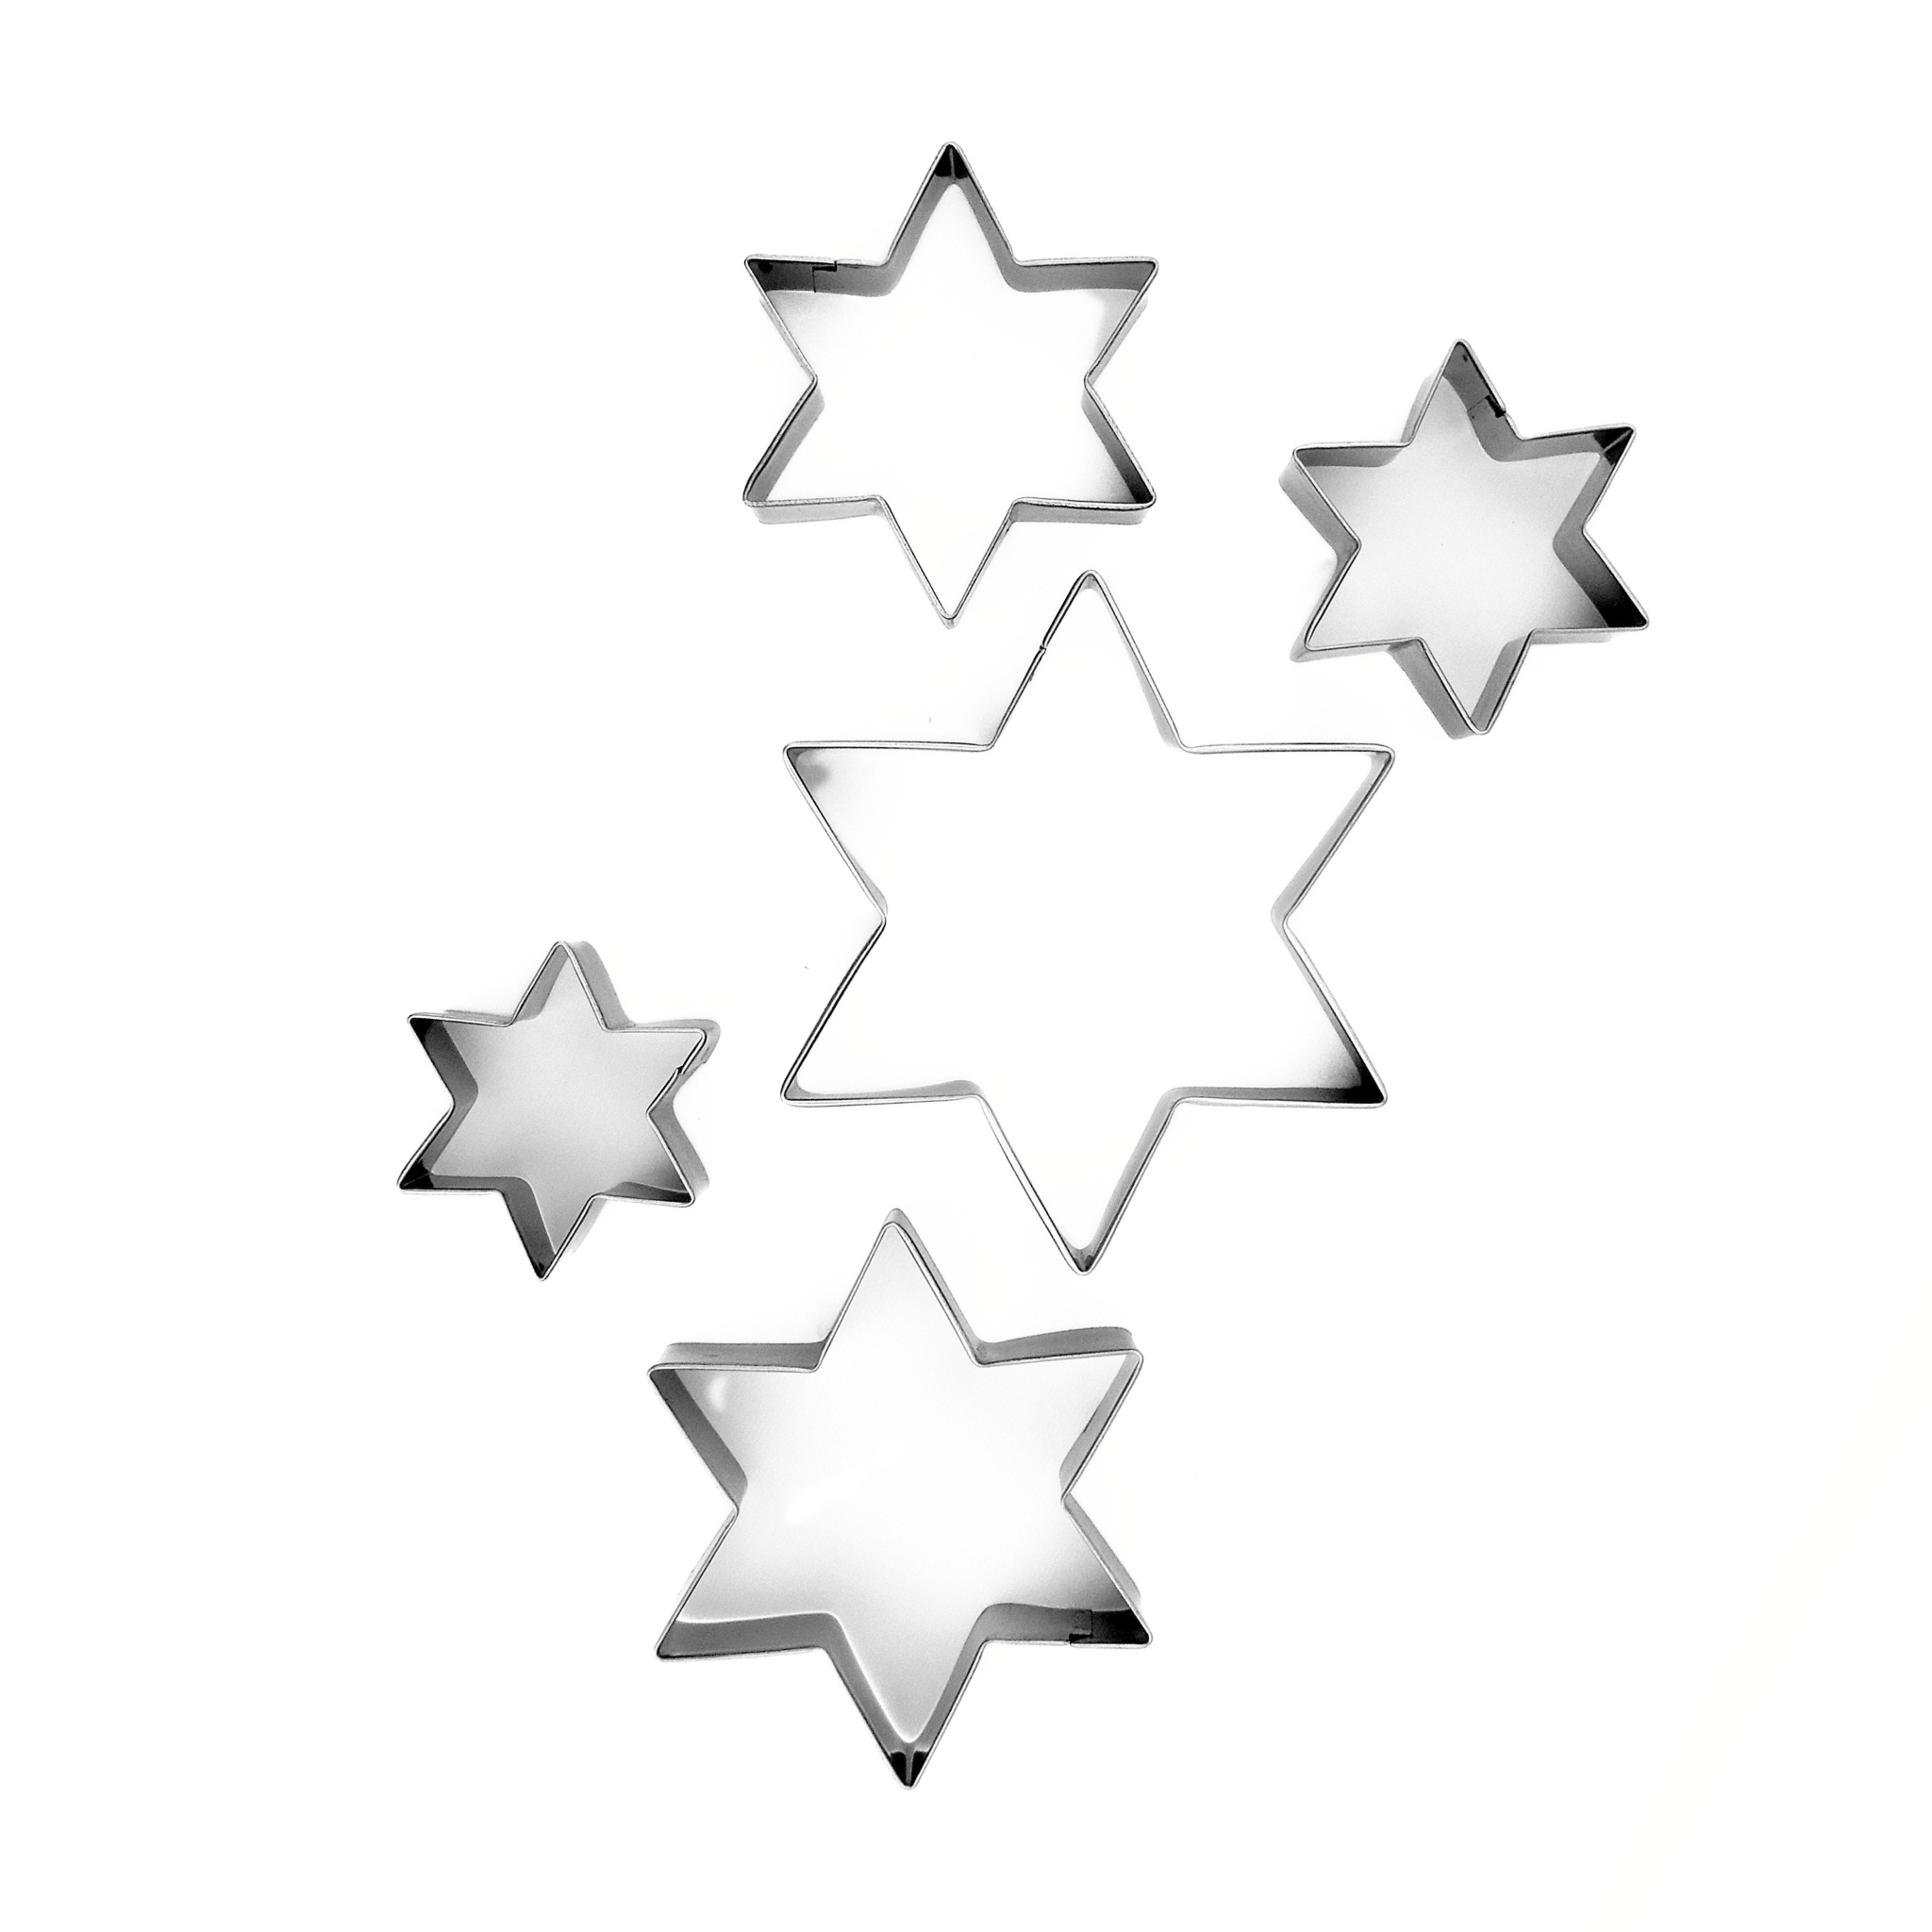 Star of David cutter